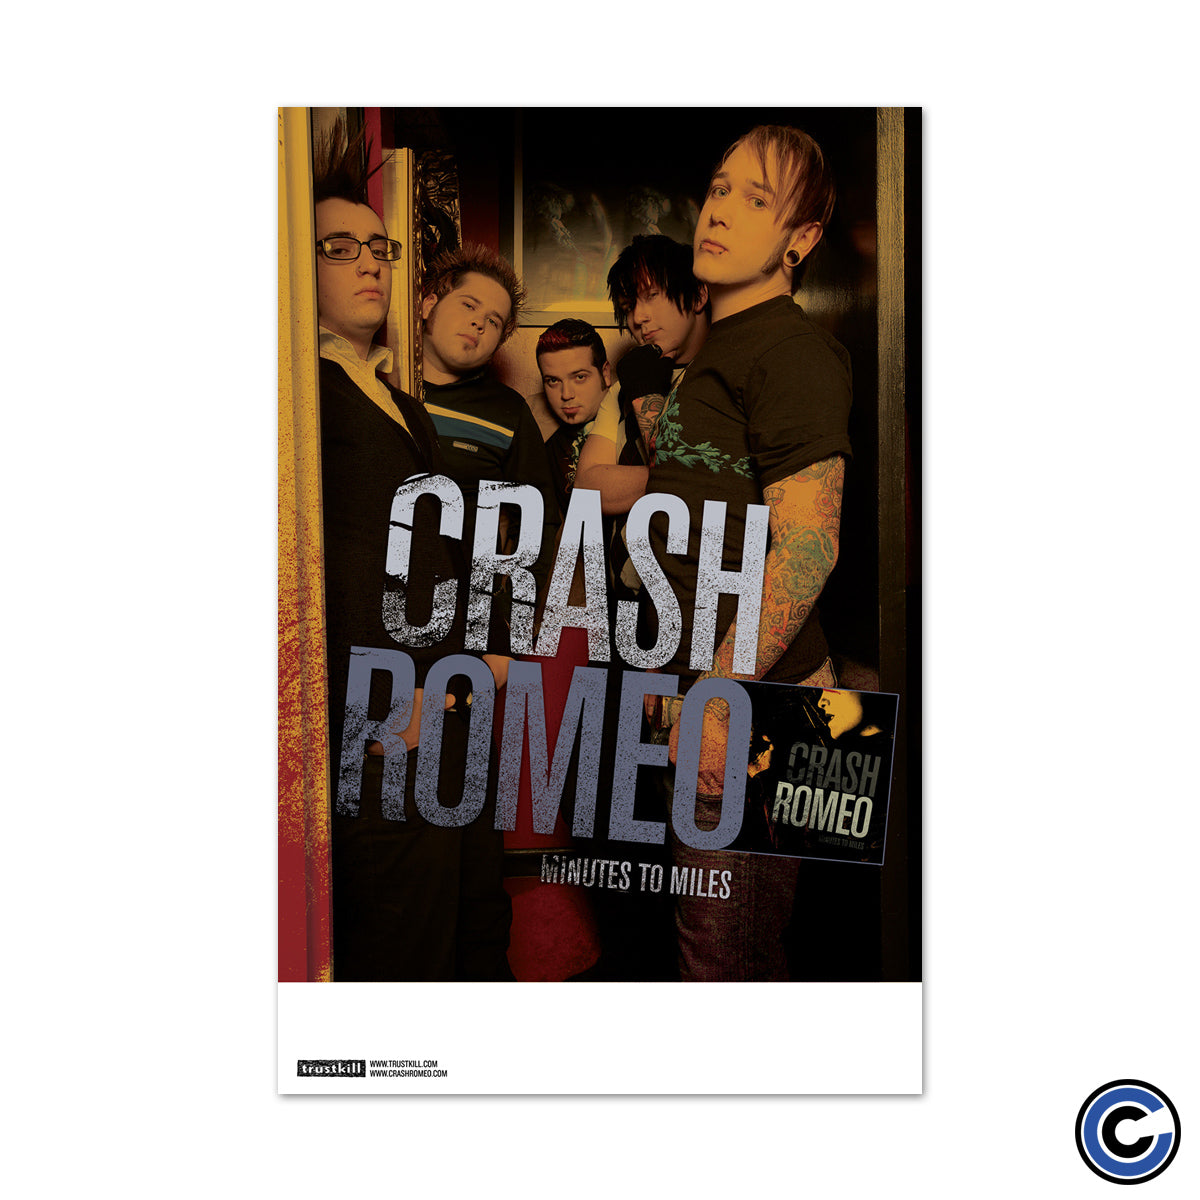 Crash Romeo "Minutes To Miles" Poster